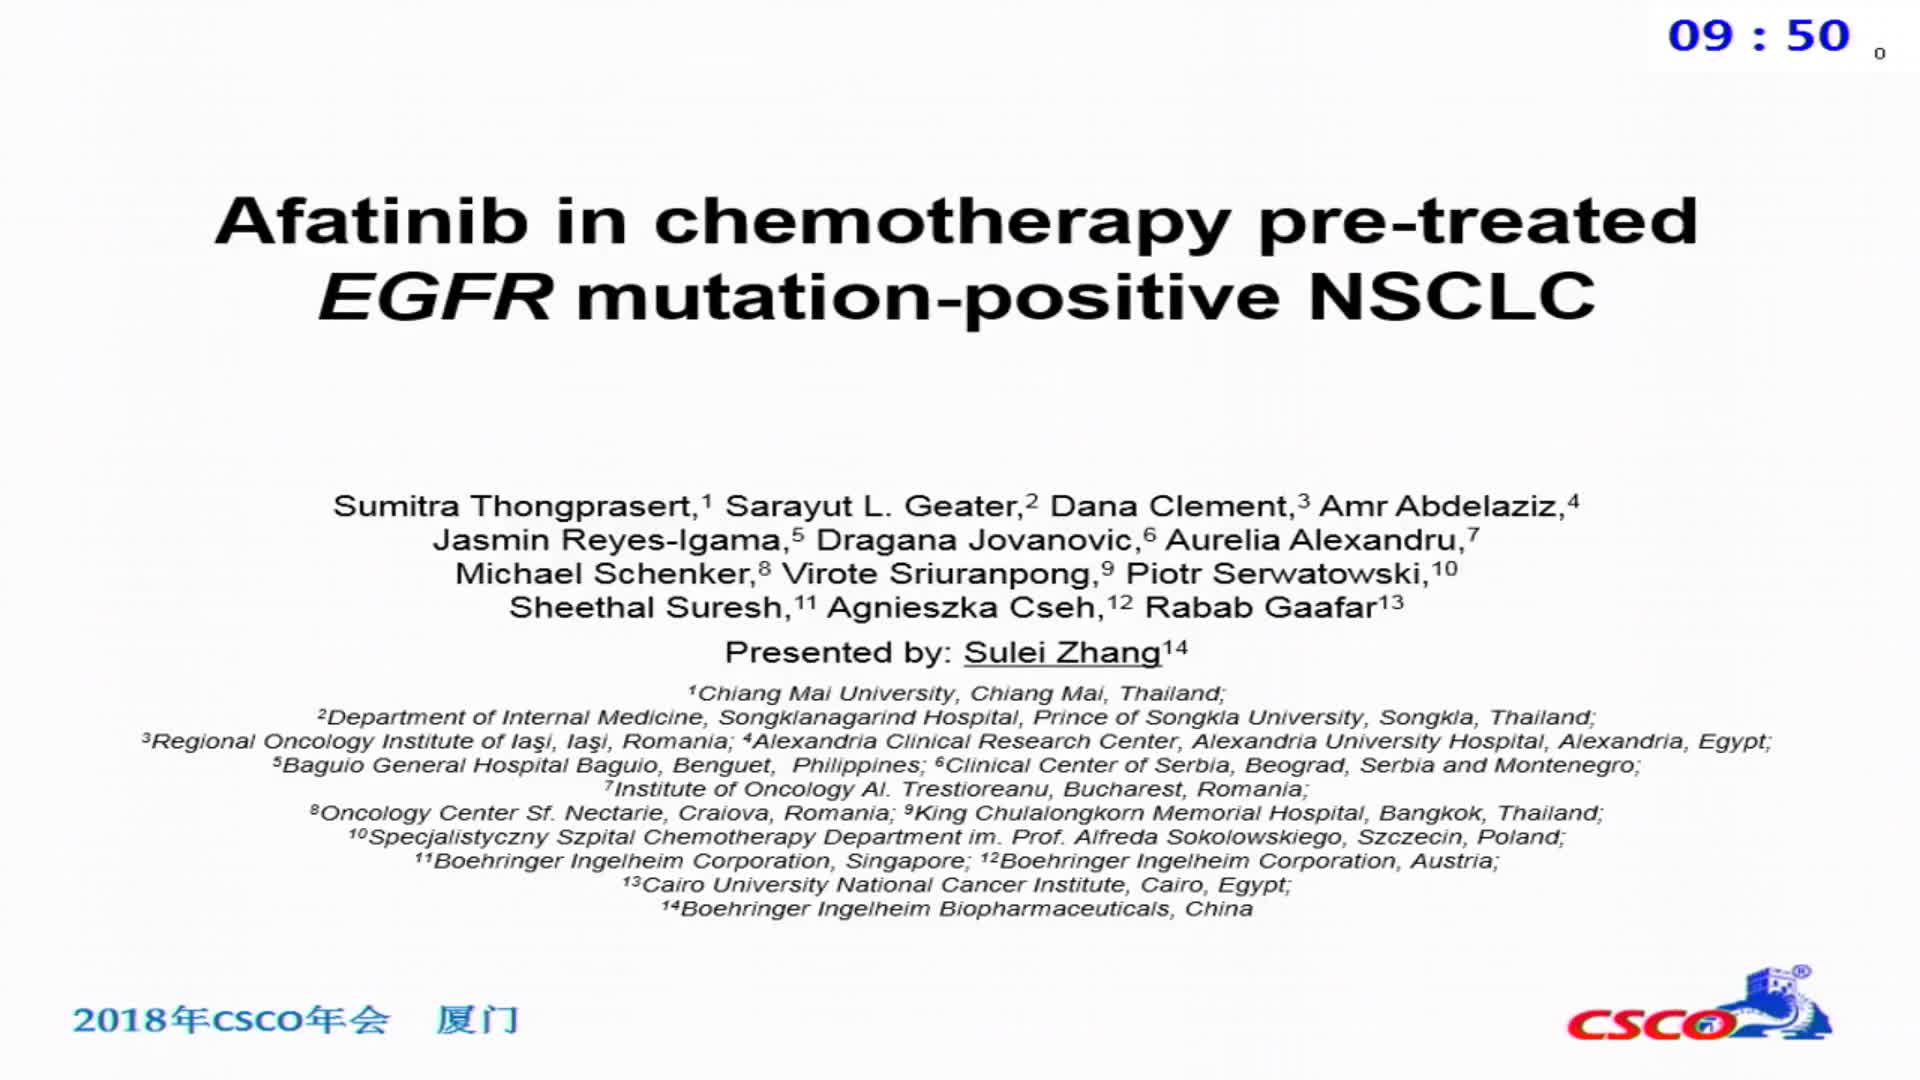 Afatinib in chemotherapy pre-treated EGFR mutation-positive NSCLC